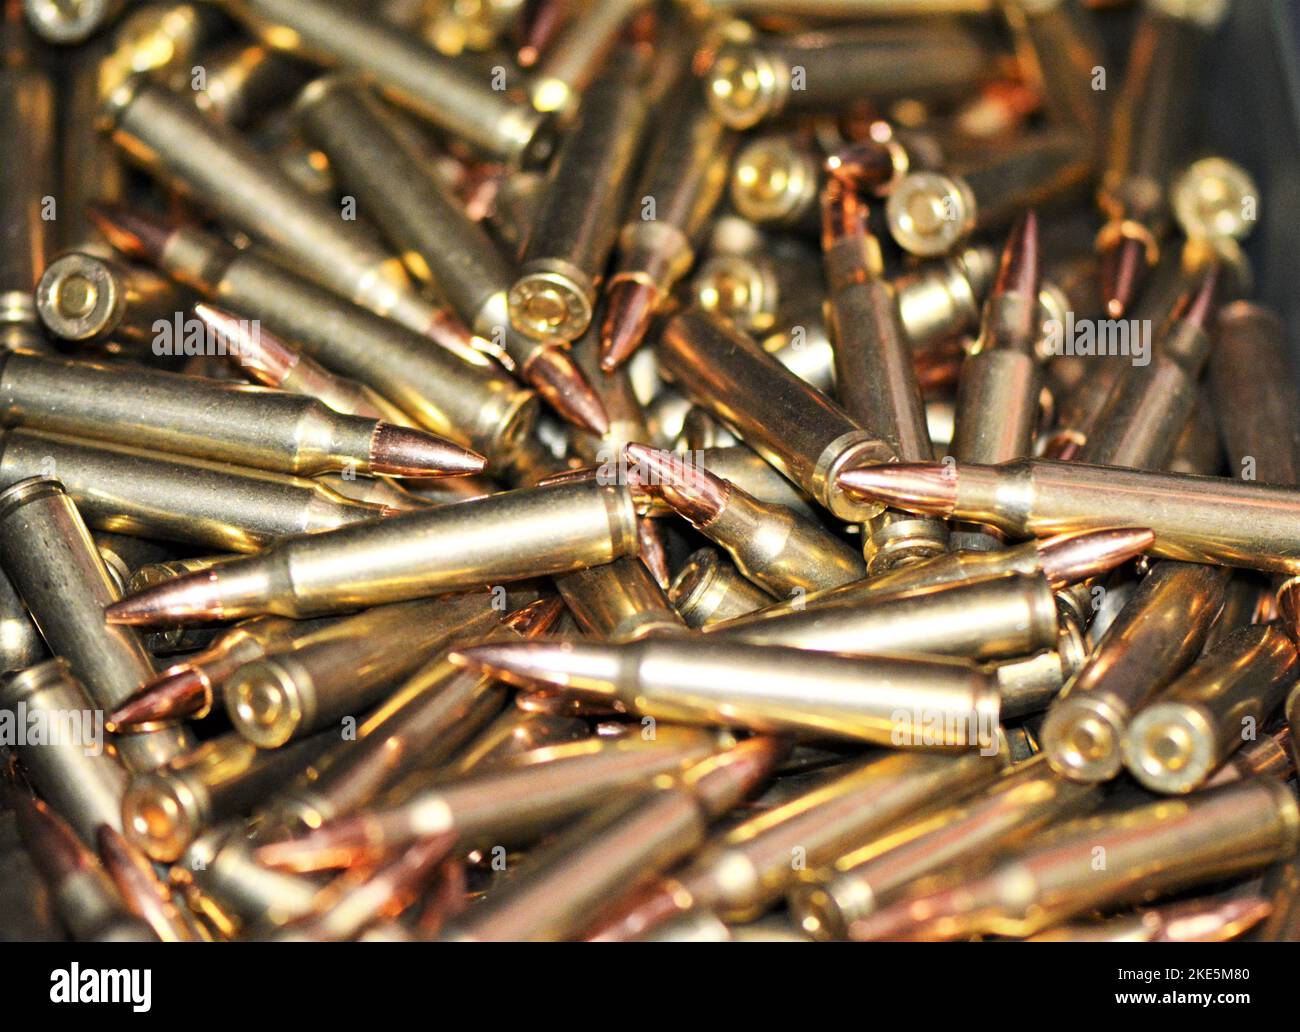 A closeup of a pile of golden rifle ammunition Stock Photo